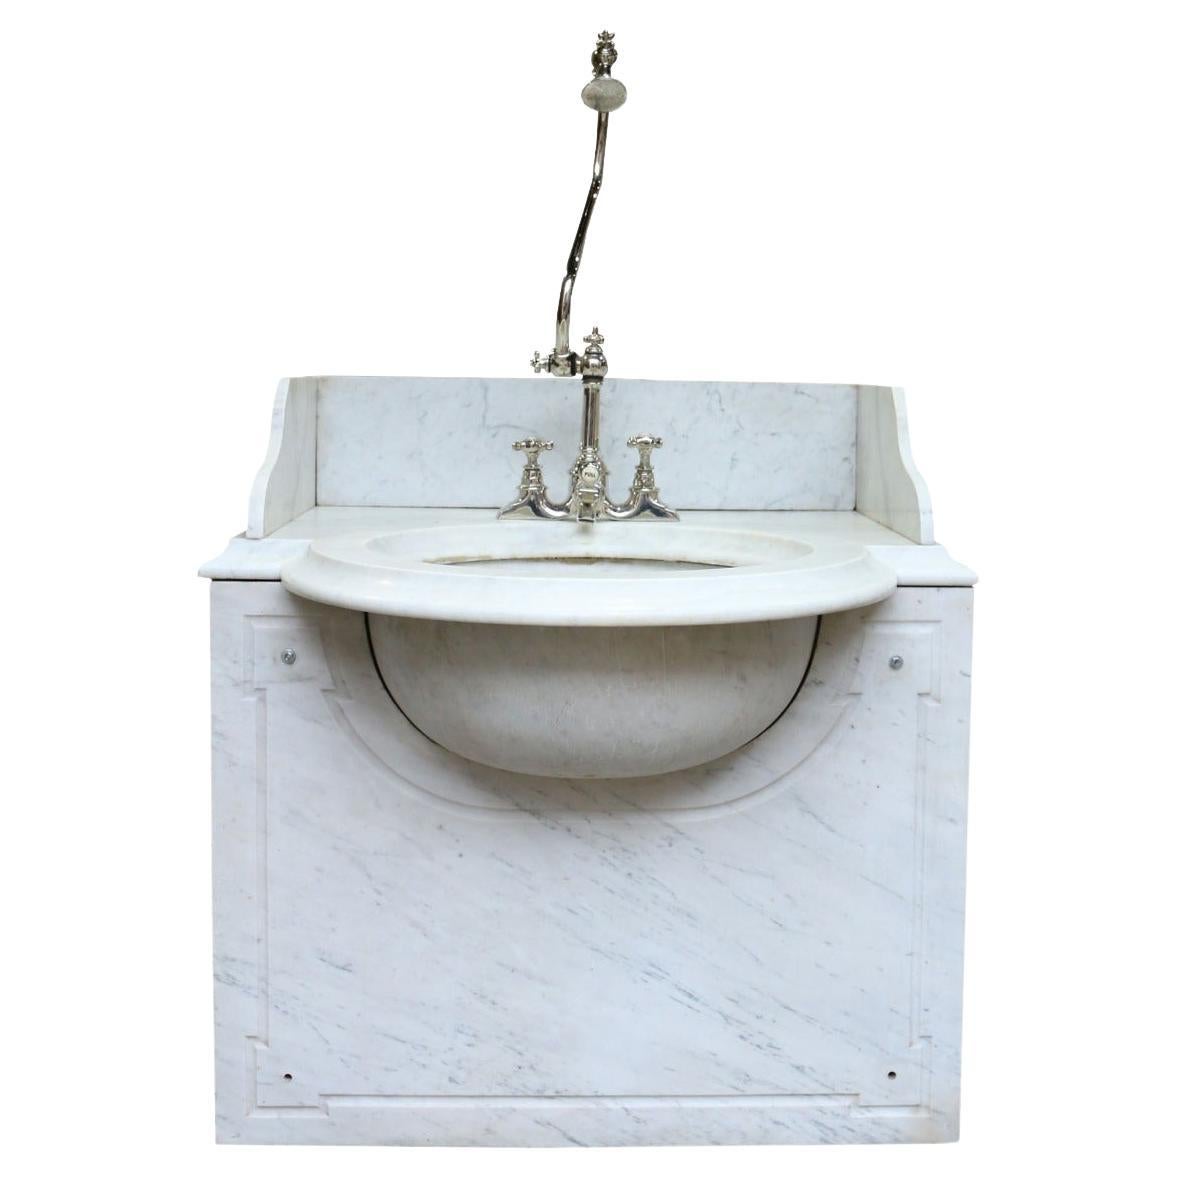 George Jennings Carrara Marble Wash Basin or Sink For Sale